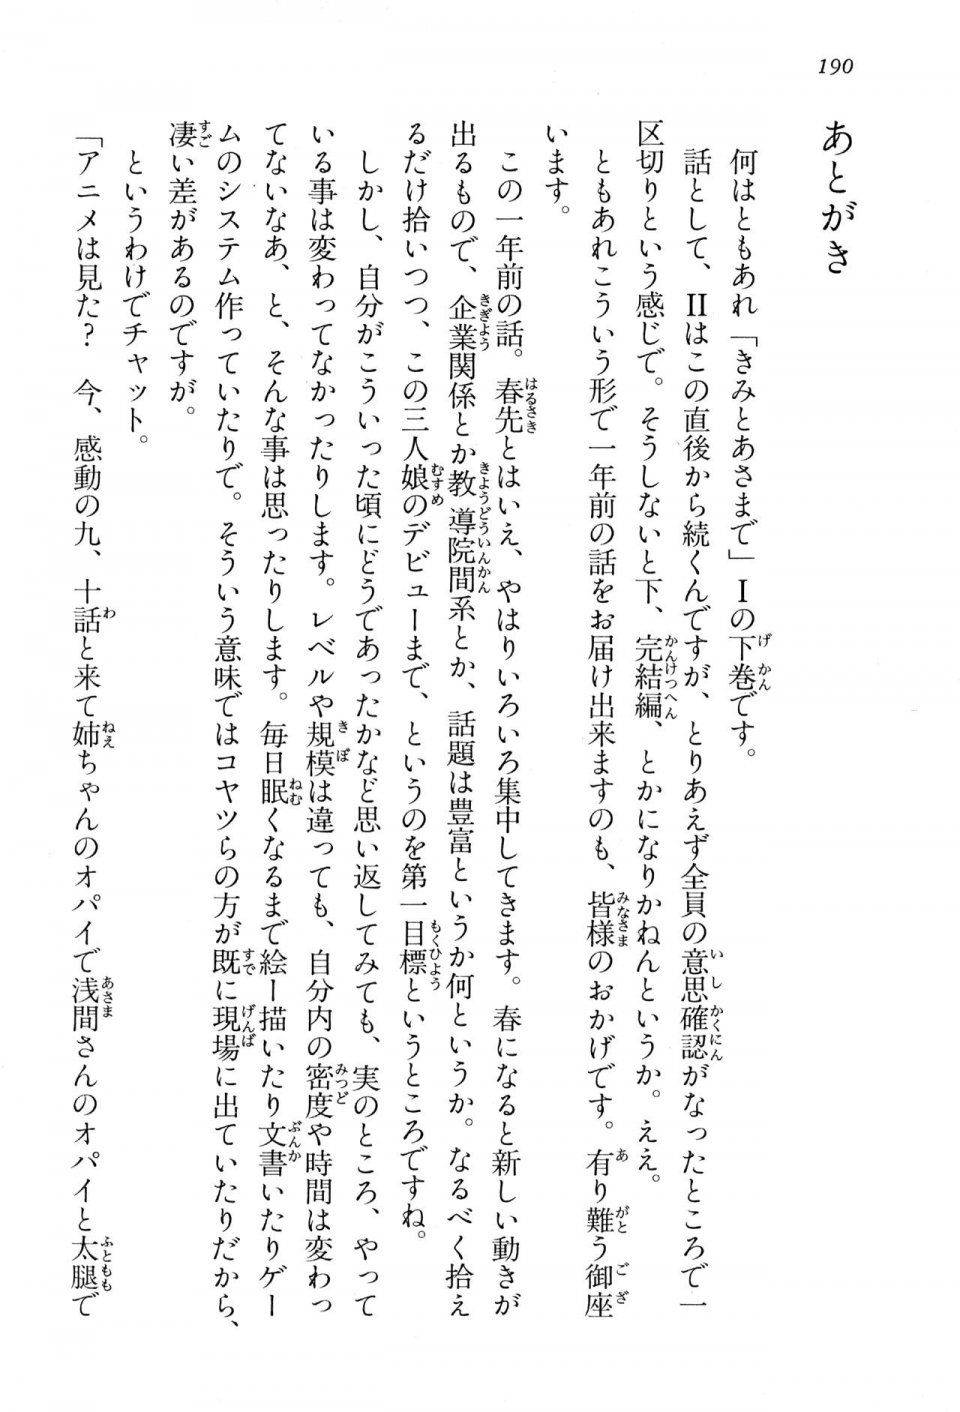 Kyoukai Senjou no Horizon BD Special Mininovel Vol 2(1B) - Photo #194